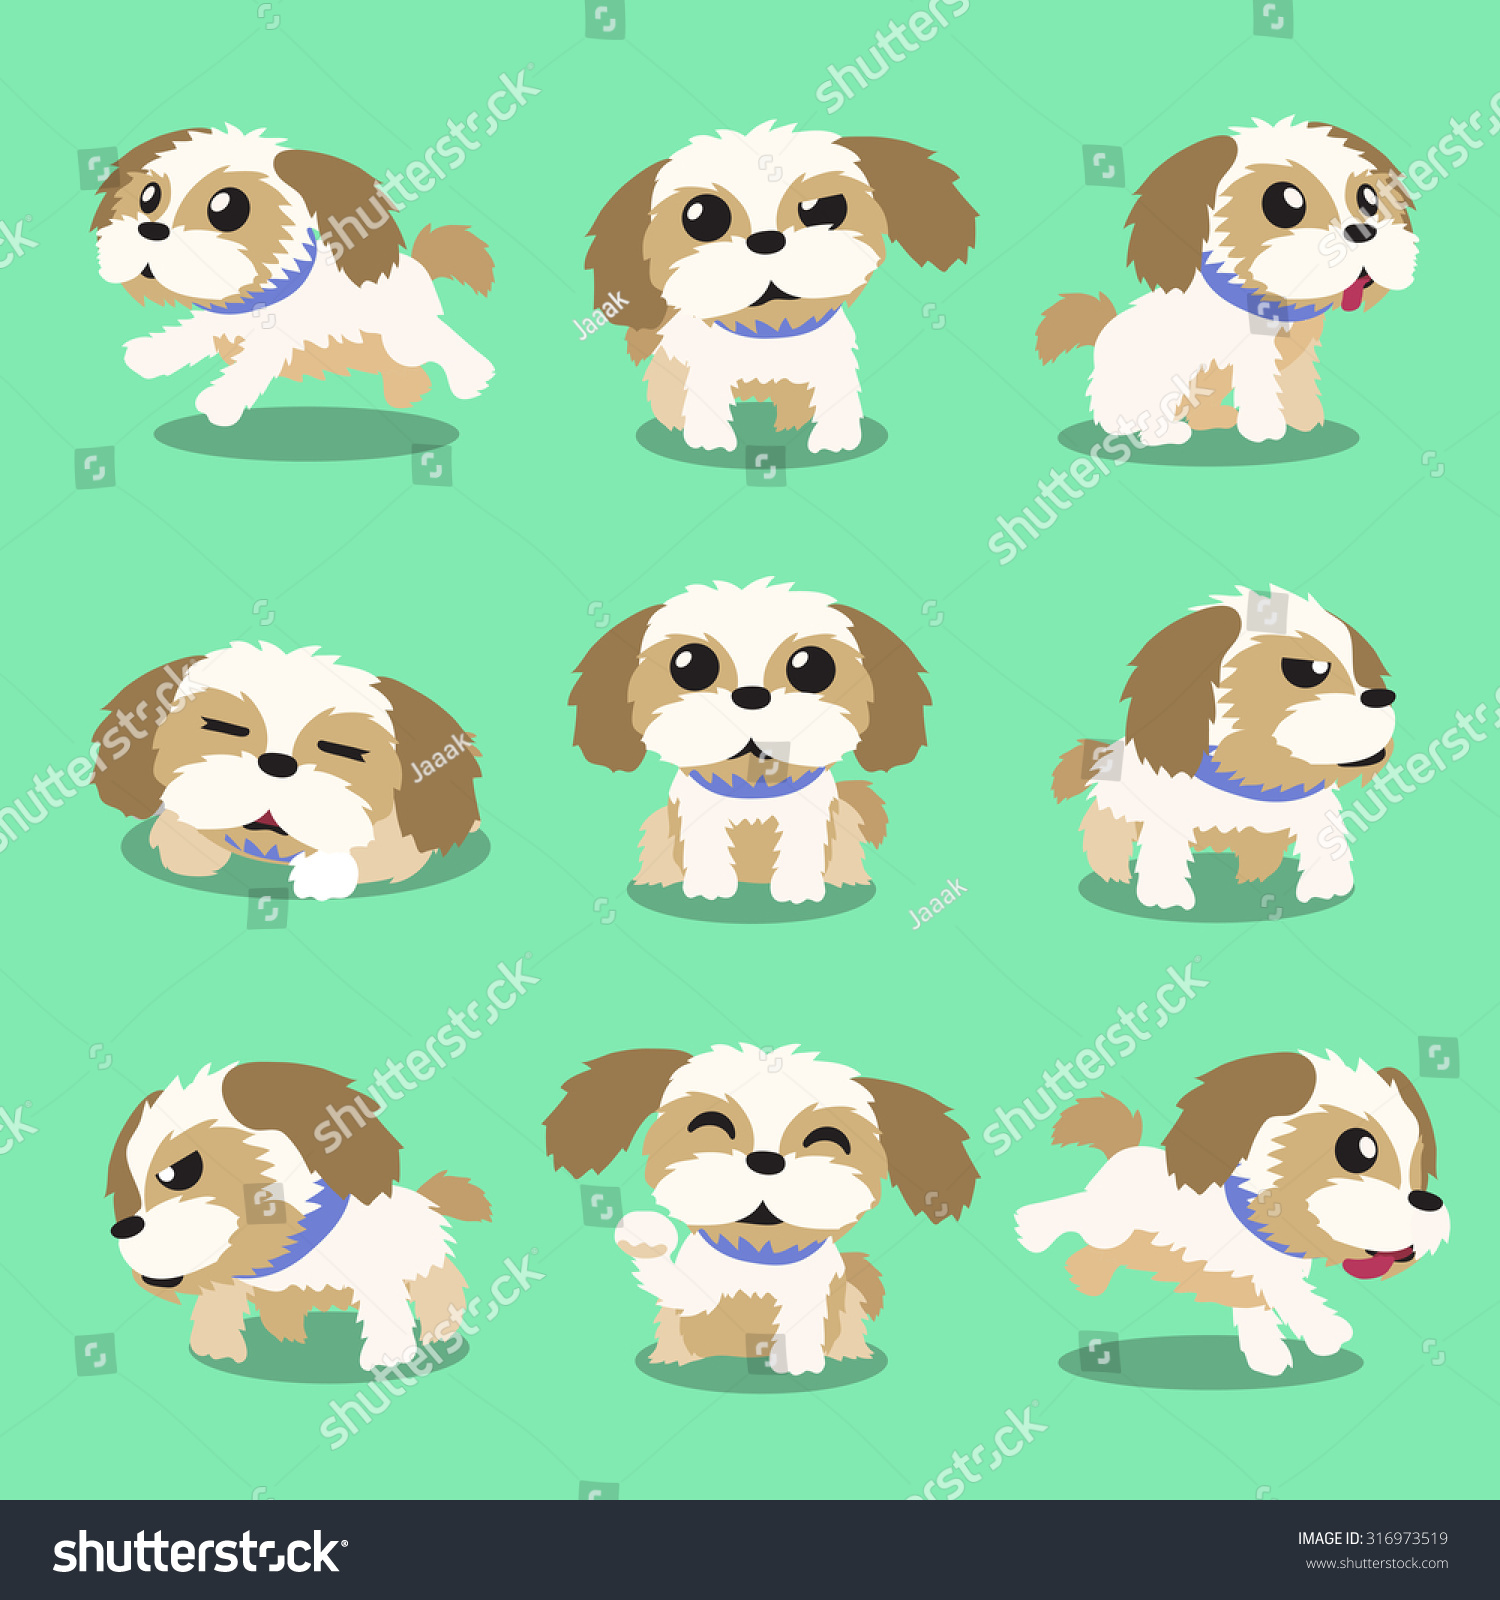 SVG of Cartoon character shih tzu dog poses svg